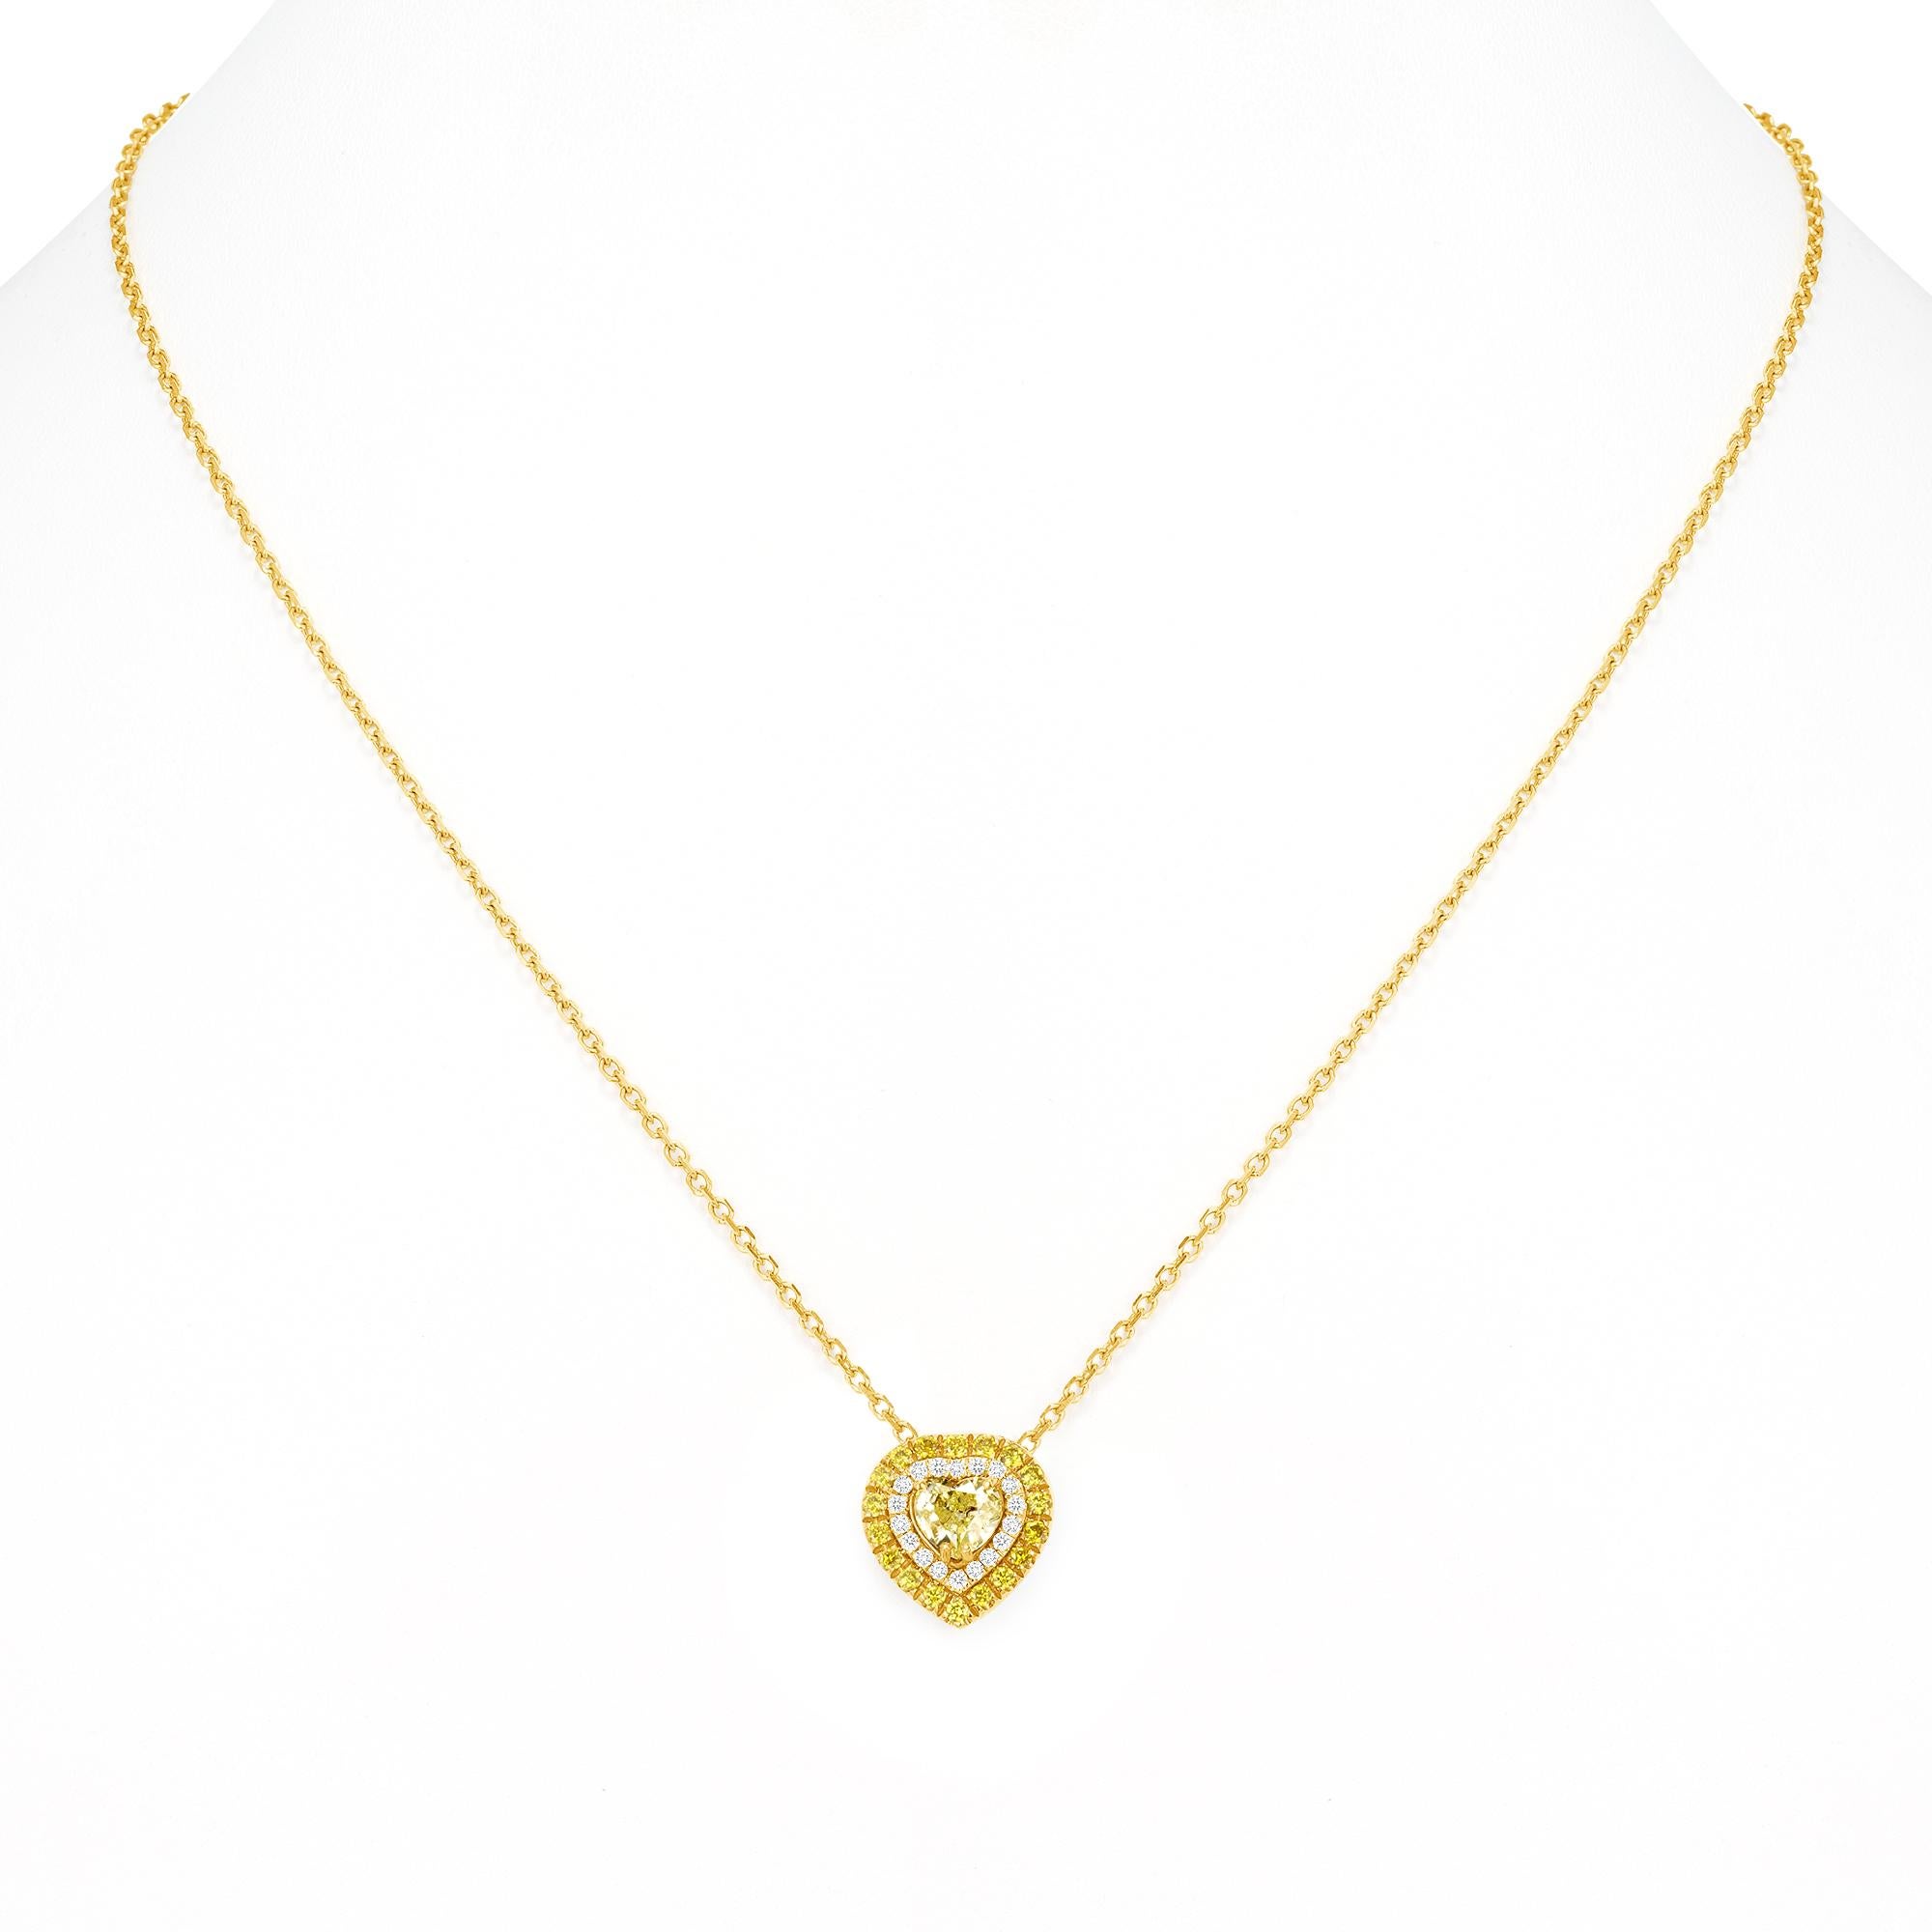 Heart Pendant Necklace with half a carat 
Fancy Yellow Genuine & Natural Diamond
.67 Round Brilliant Diamonds surrounding the center stone.